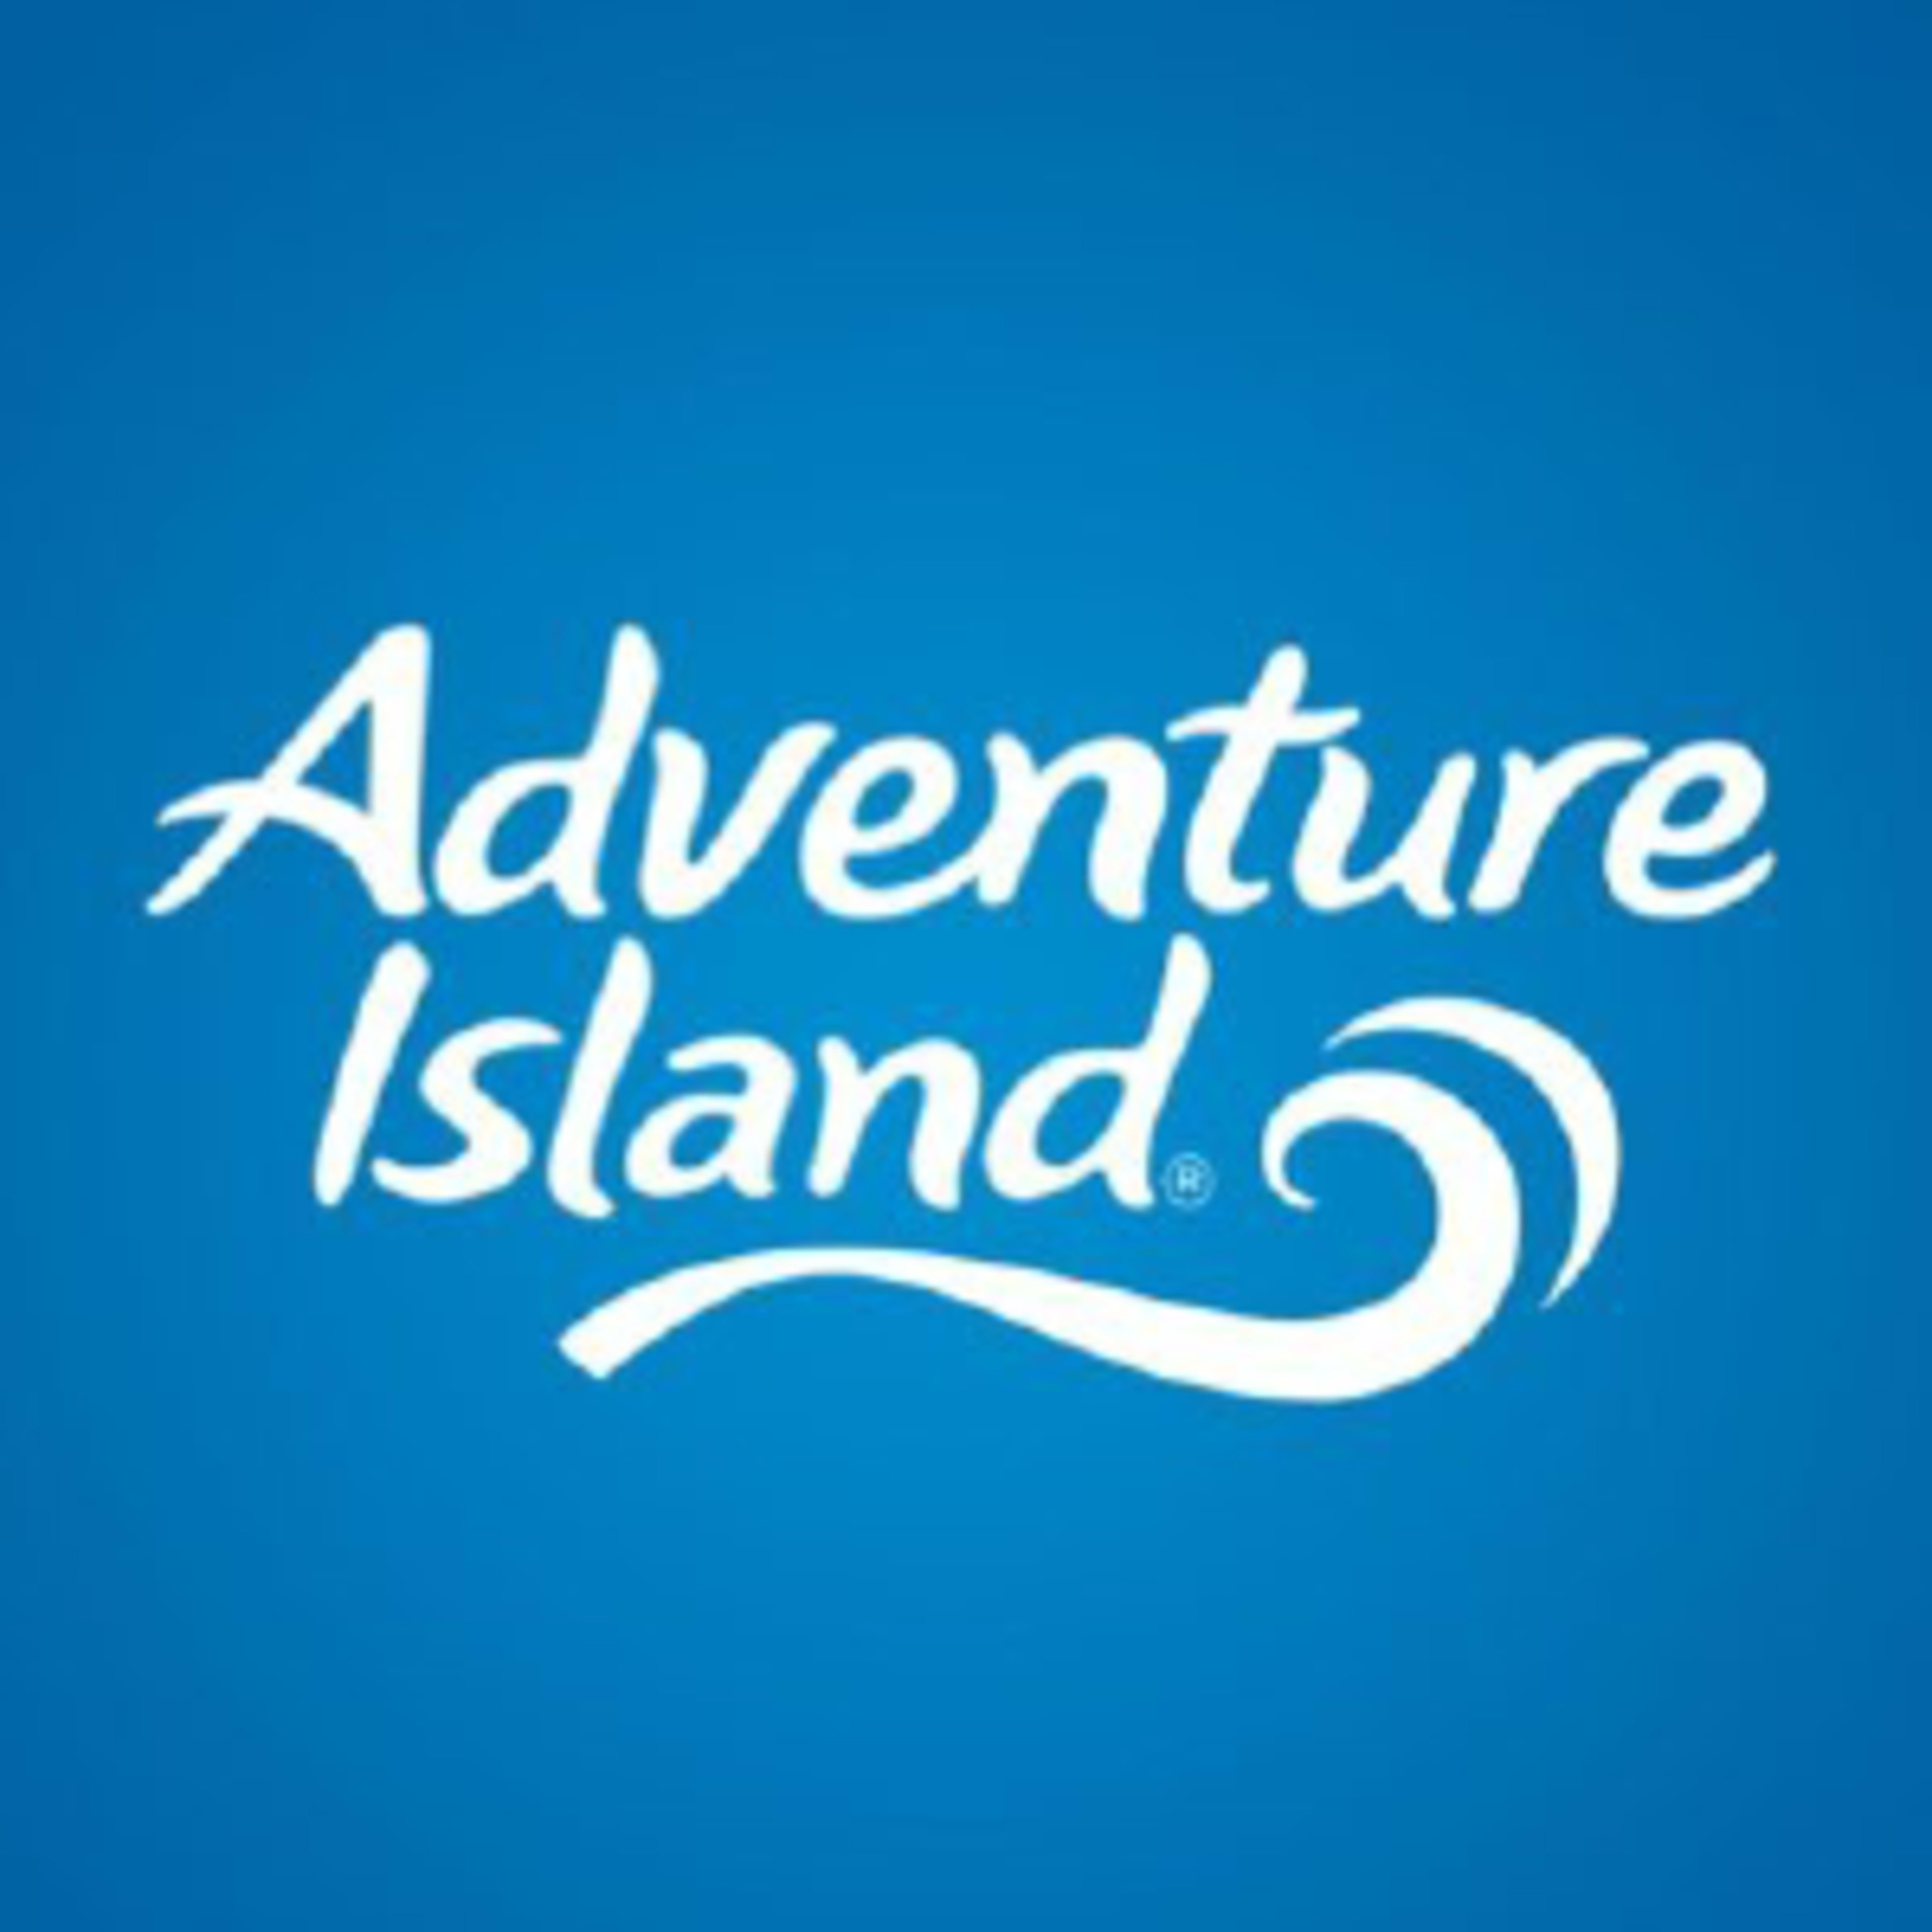 Adventure IslandCode